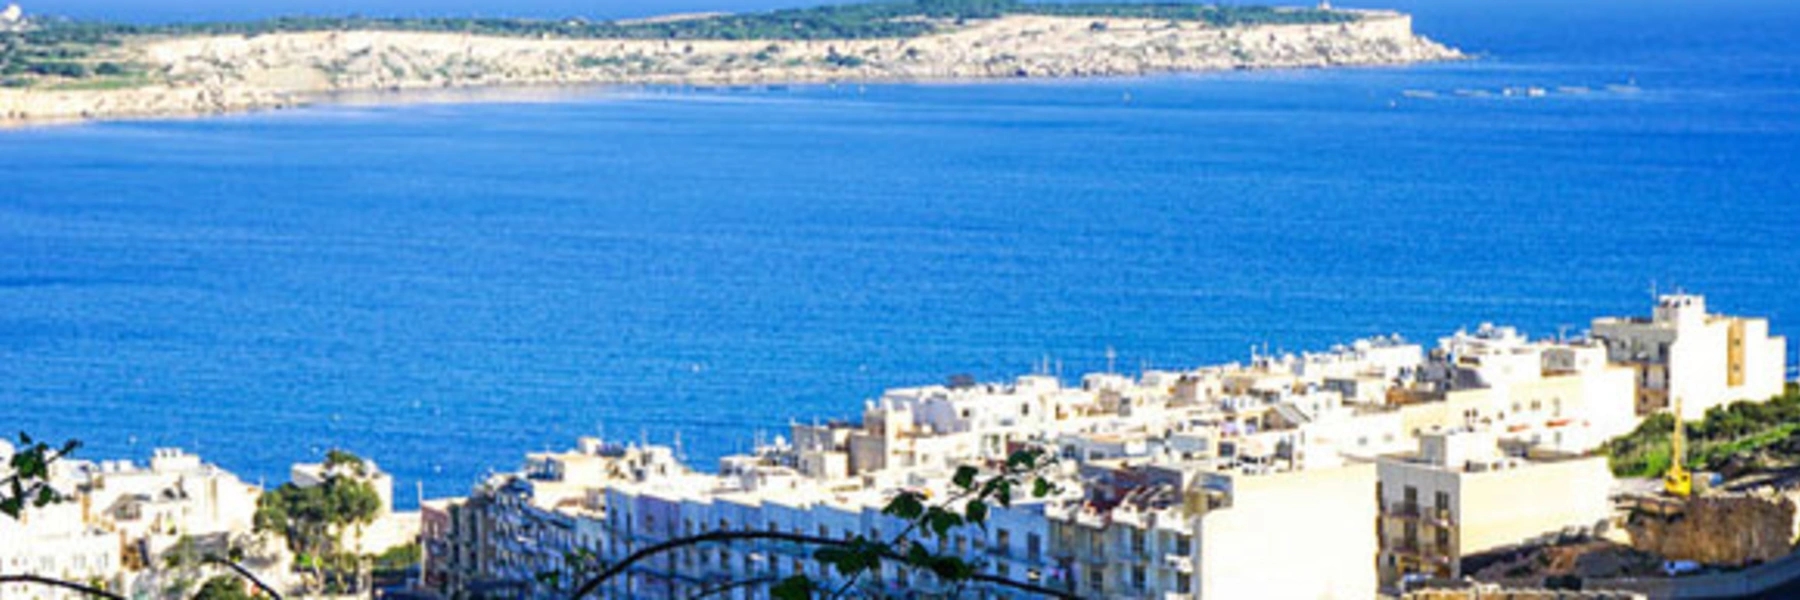 Buying Real Estate In Malta